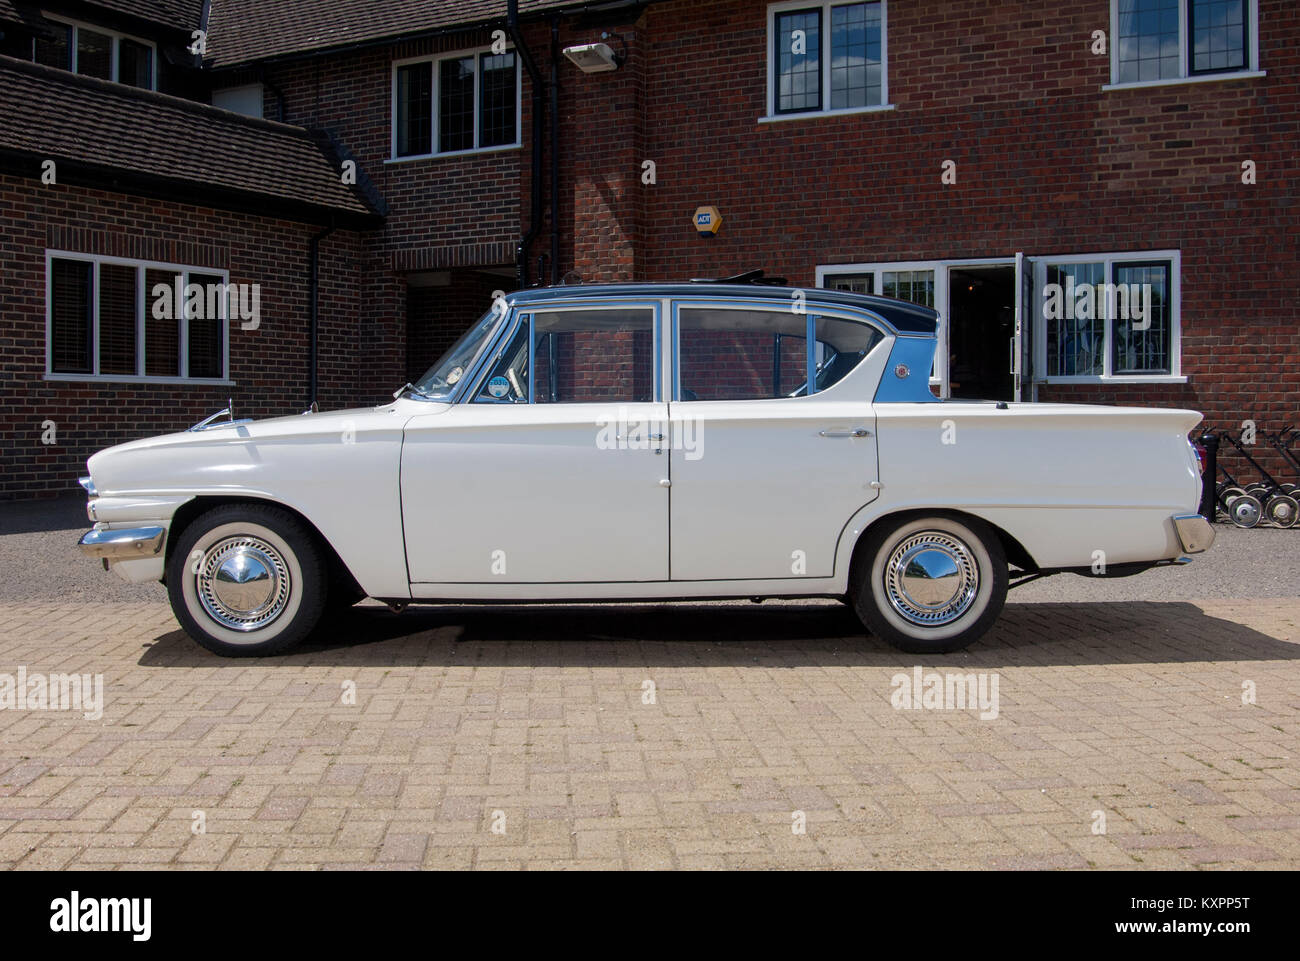 1962 Ford Consul Classic, classic British family car Stock Photo